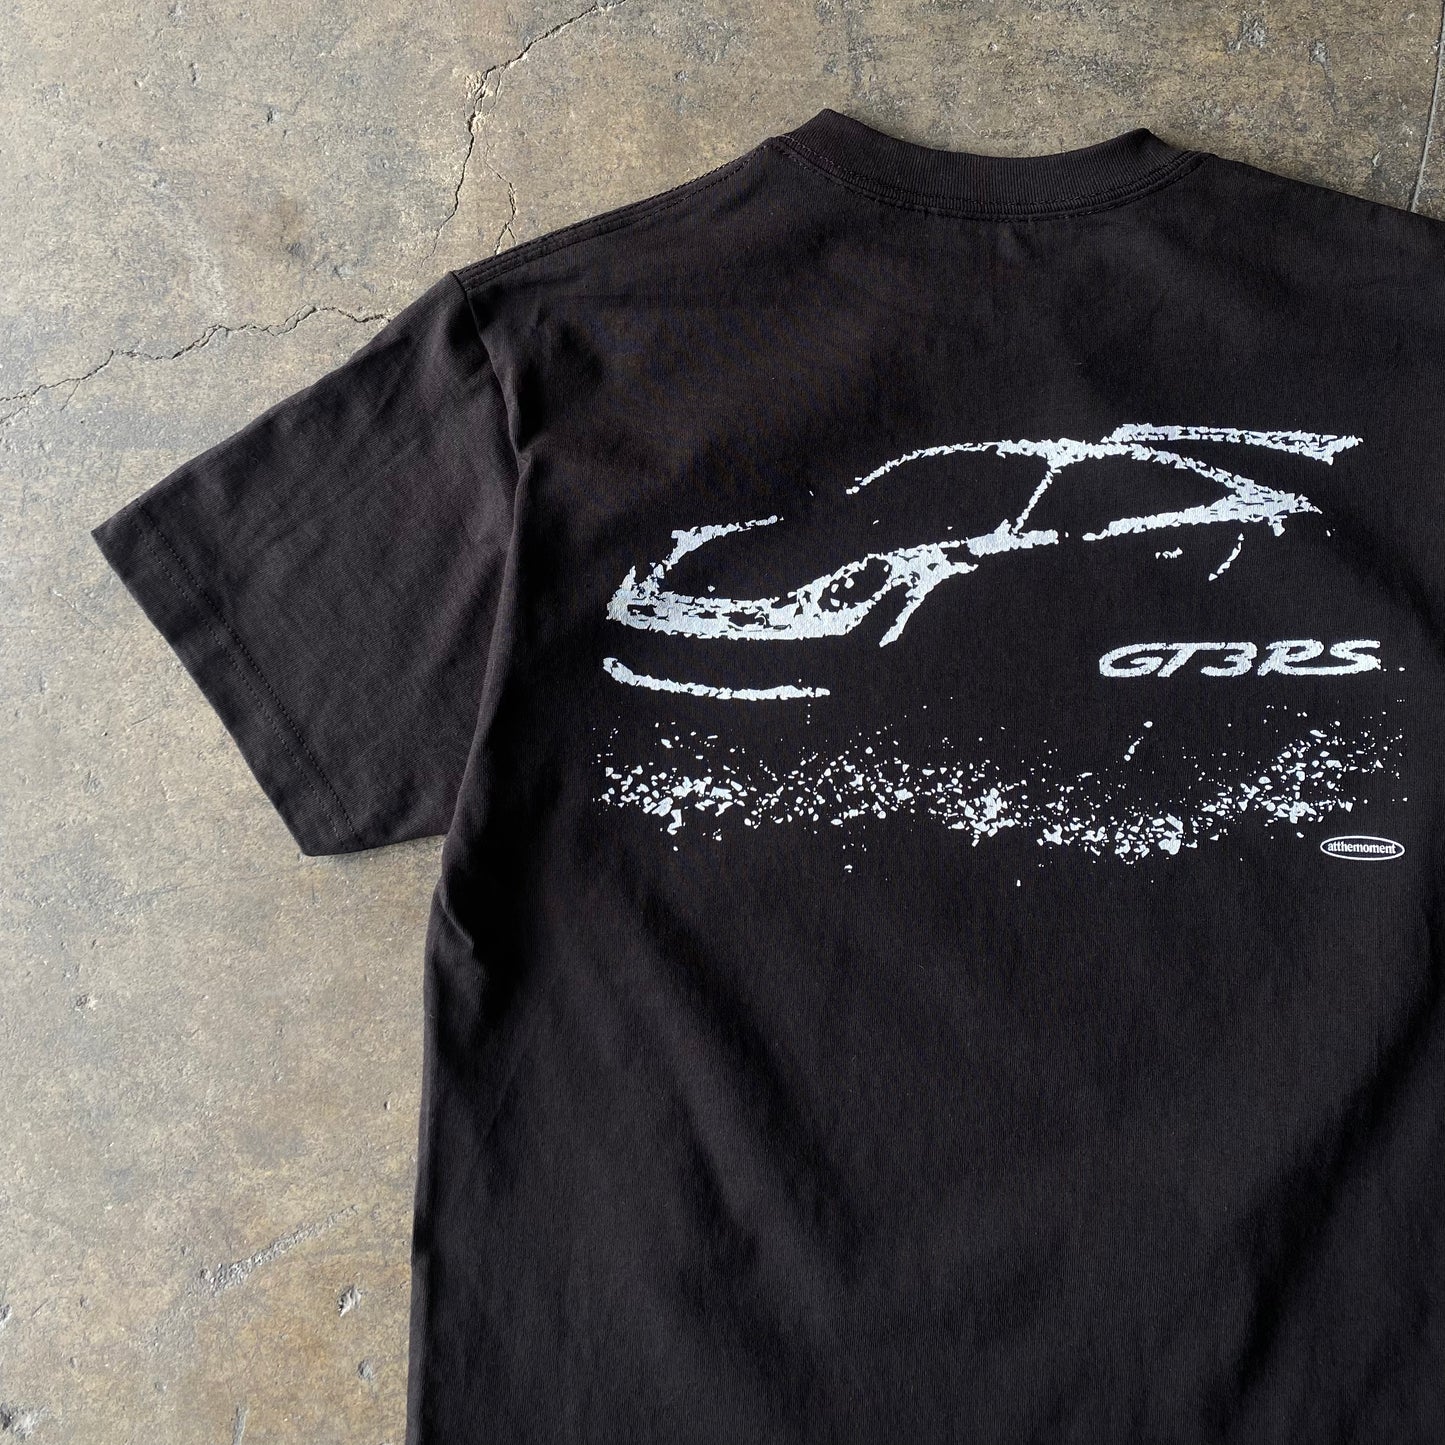 GT3 RS T-Shirt